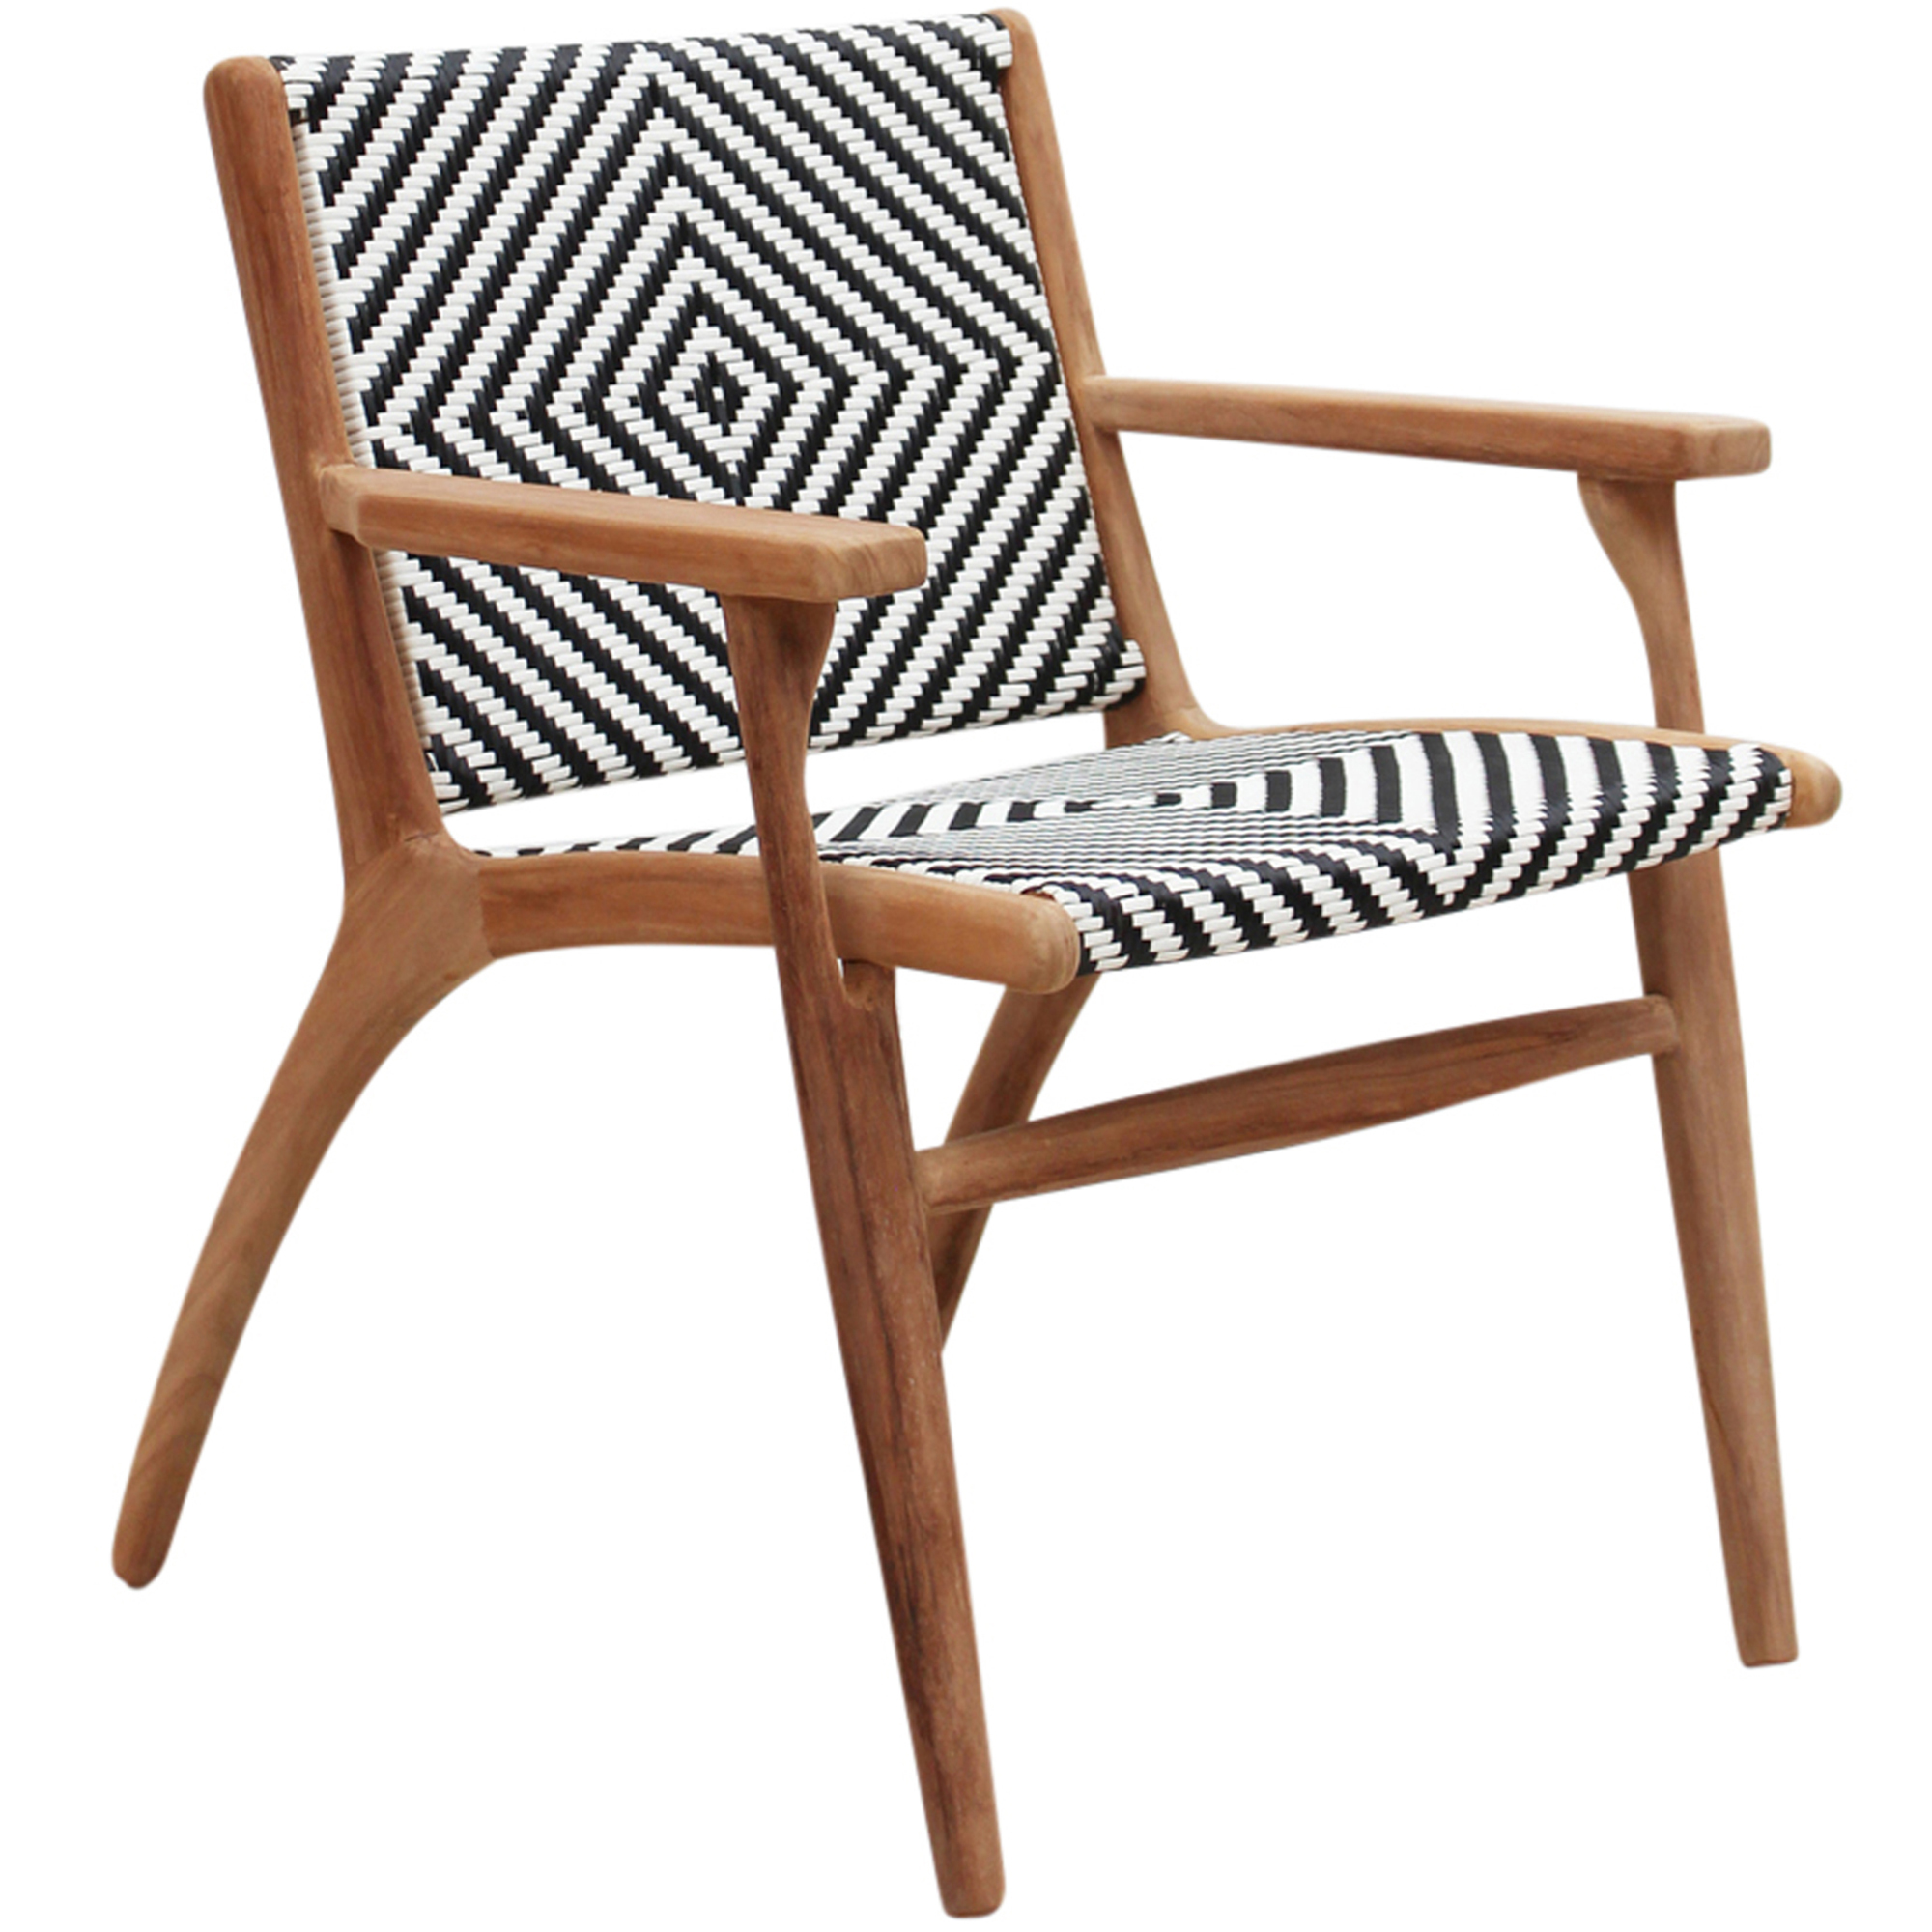 New Zahara Teak Outdoor Armchair Carrington Furniture Outdoor